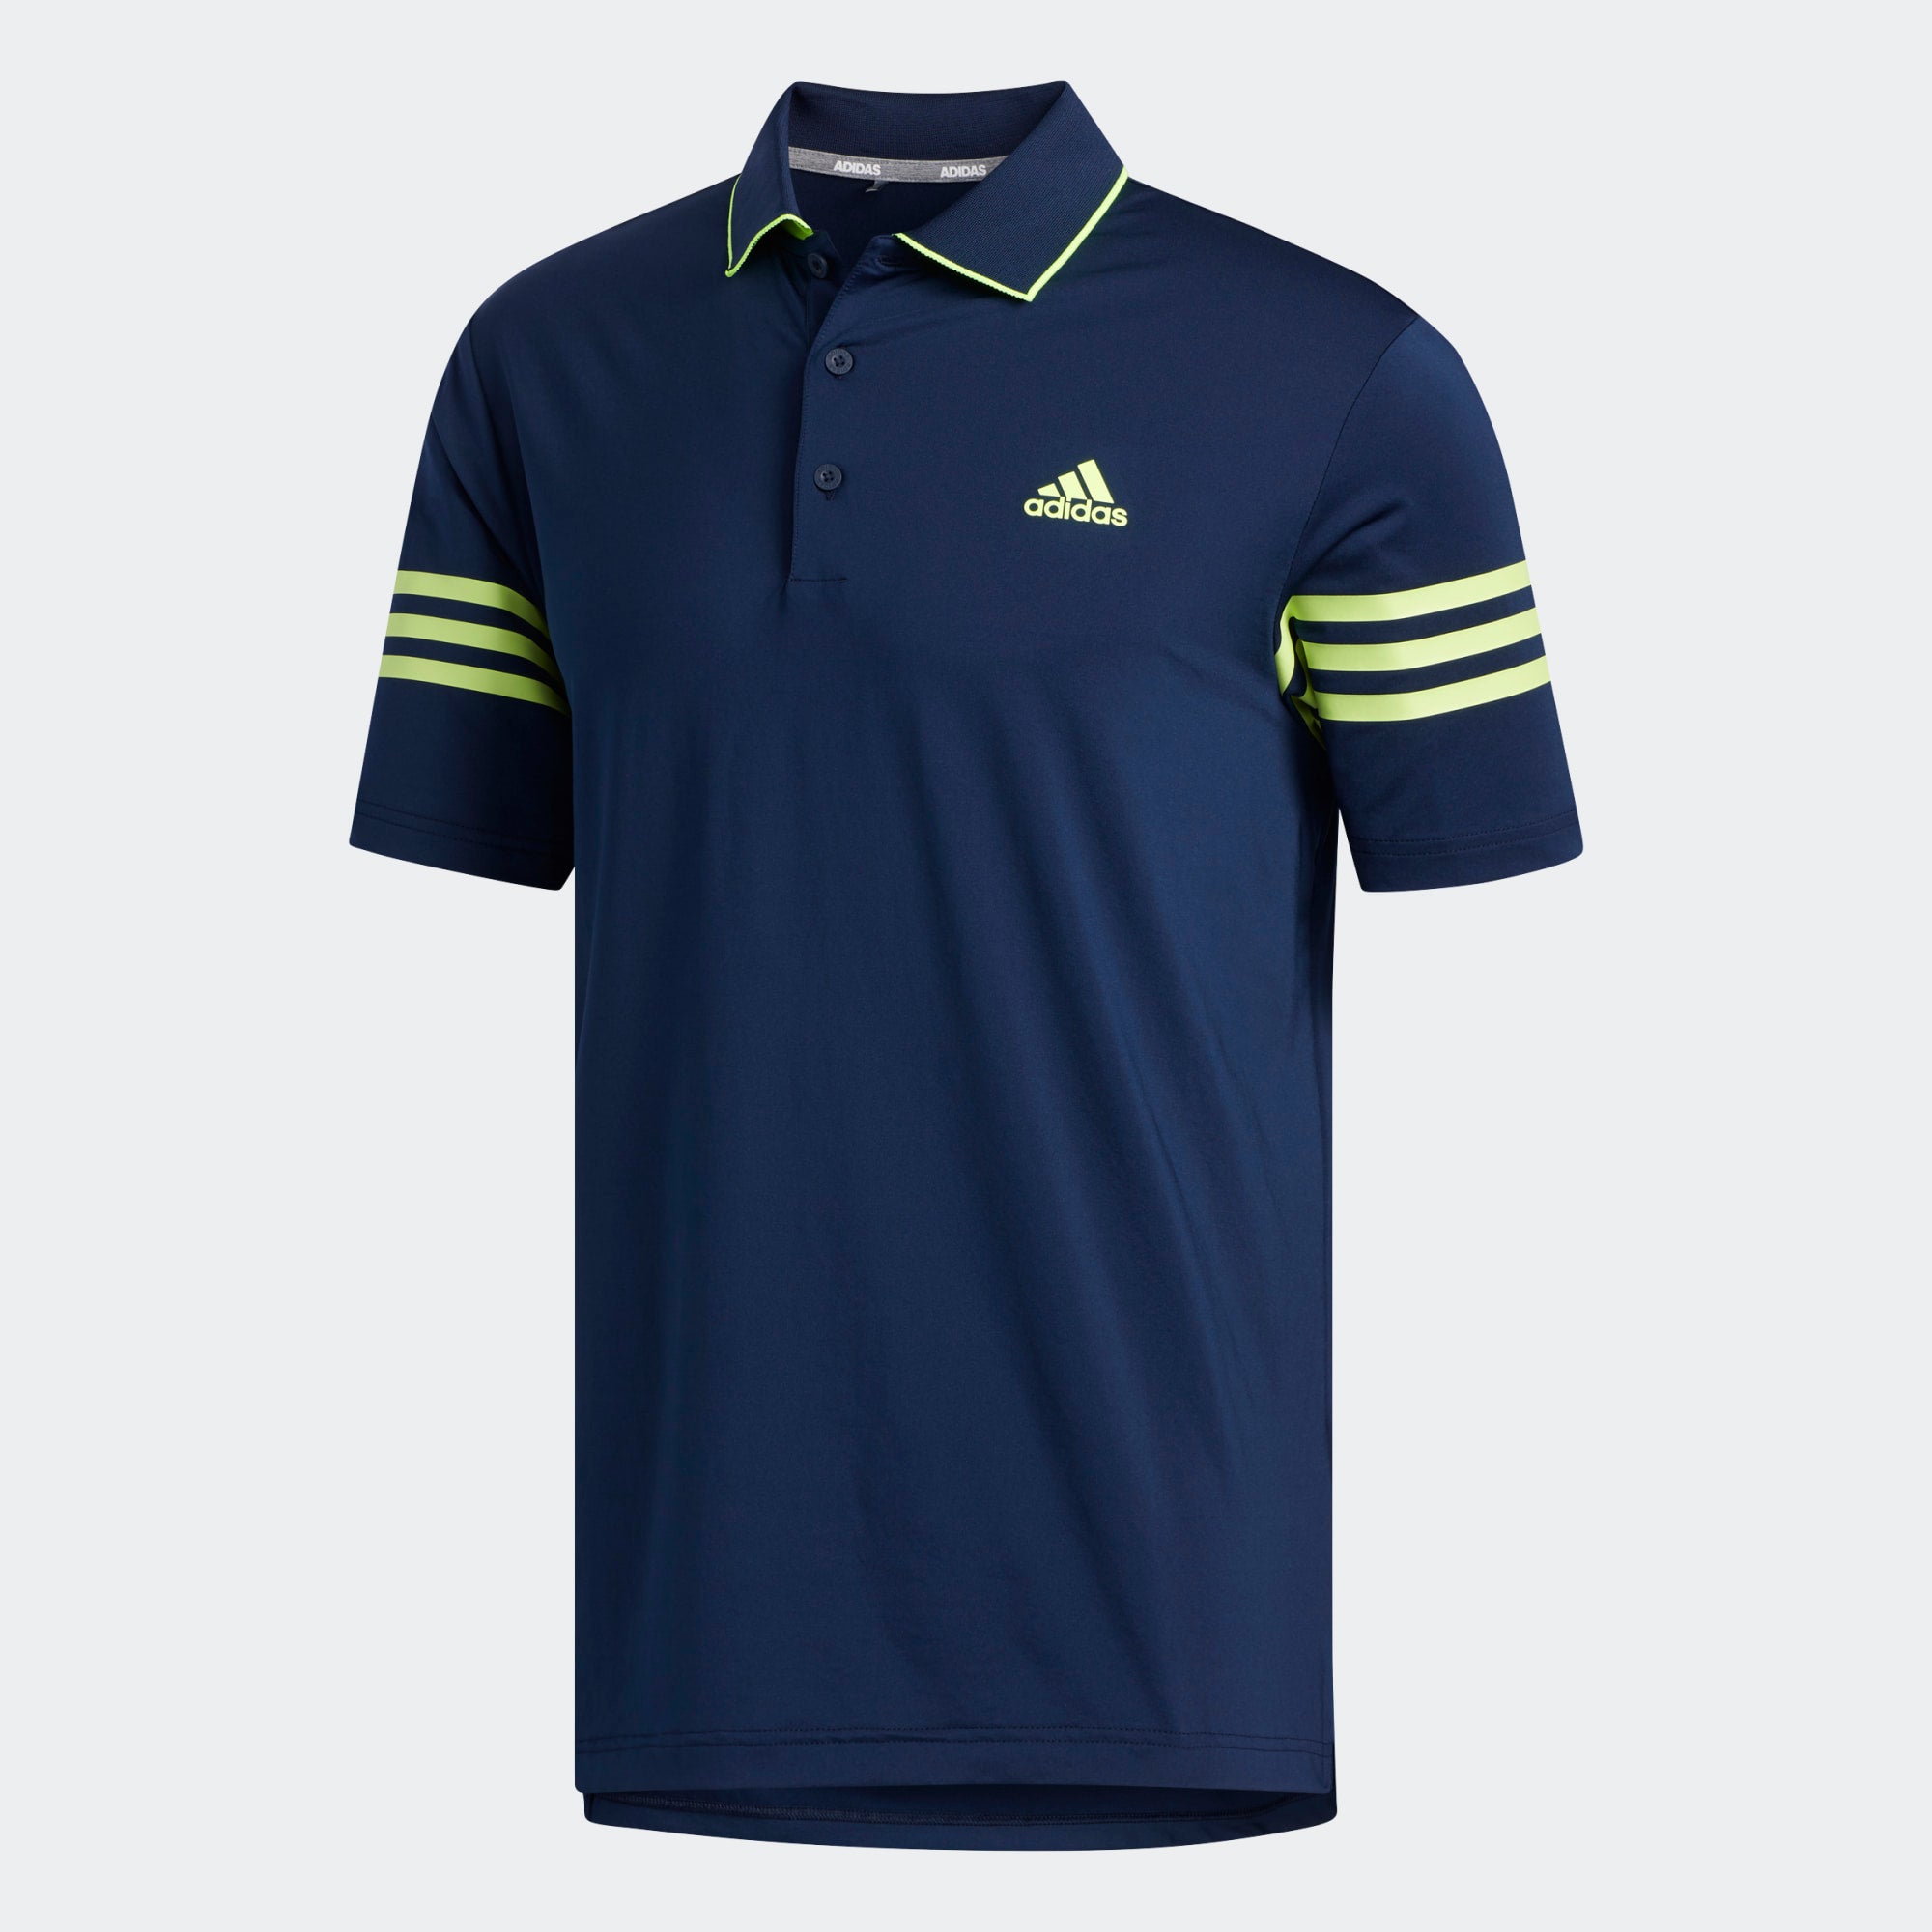 Adidas Ultimate365 Blocked Polo Tshirt (Navy/Solar Yellow) (US Sizes)